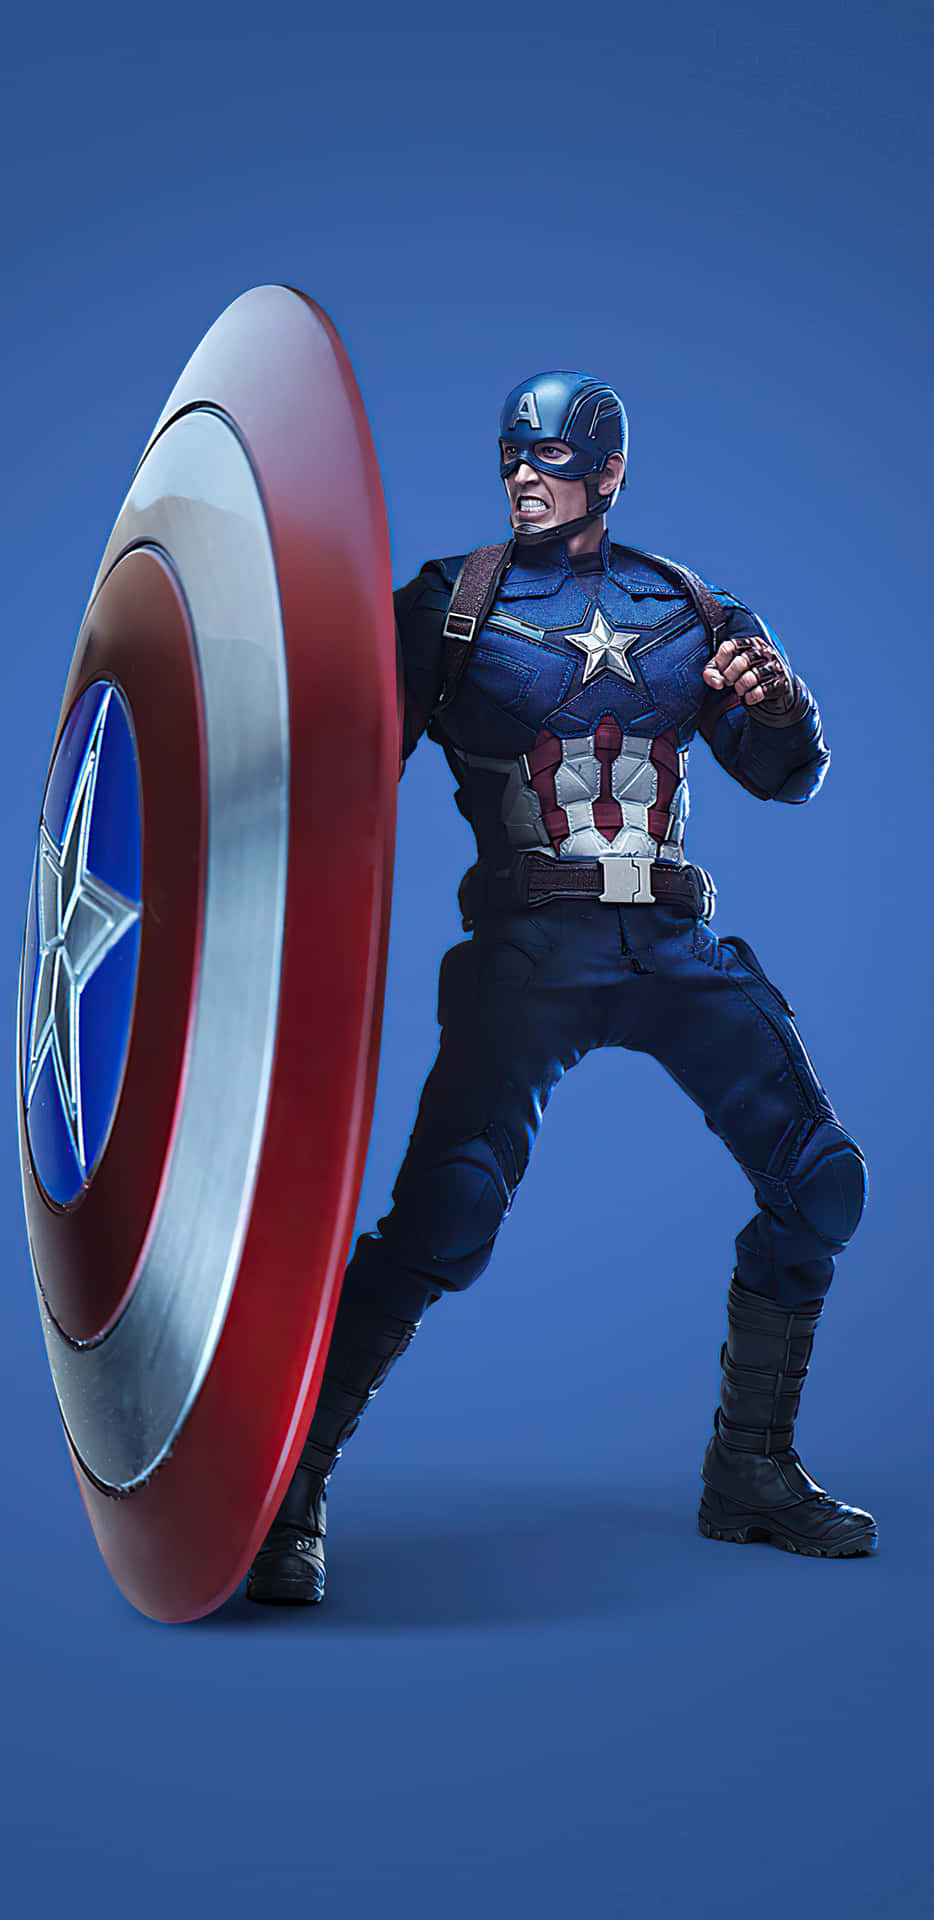 Pixel 3xl Captain America-baggrund livsstørrelse skjold design